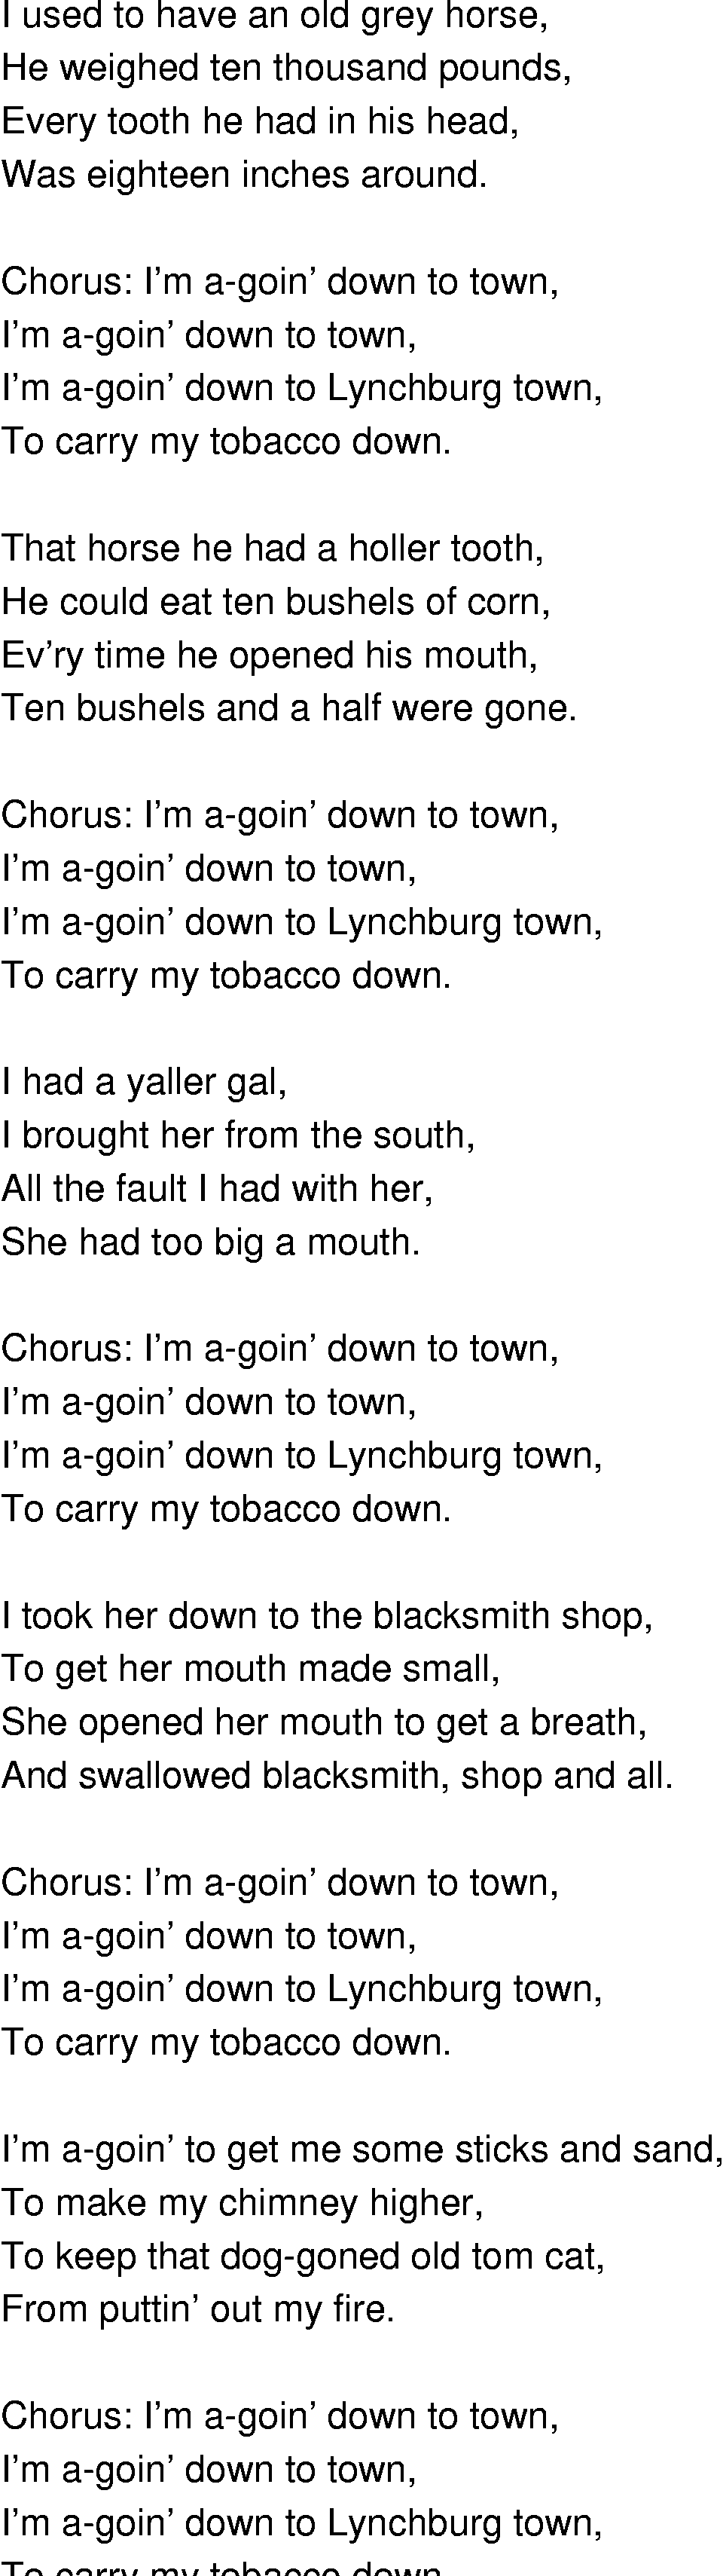 Old-Time (oldtimey) Song Lyrics - lynchburg town